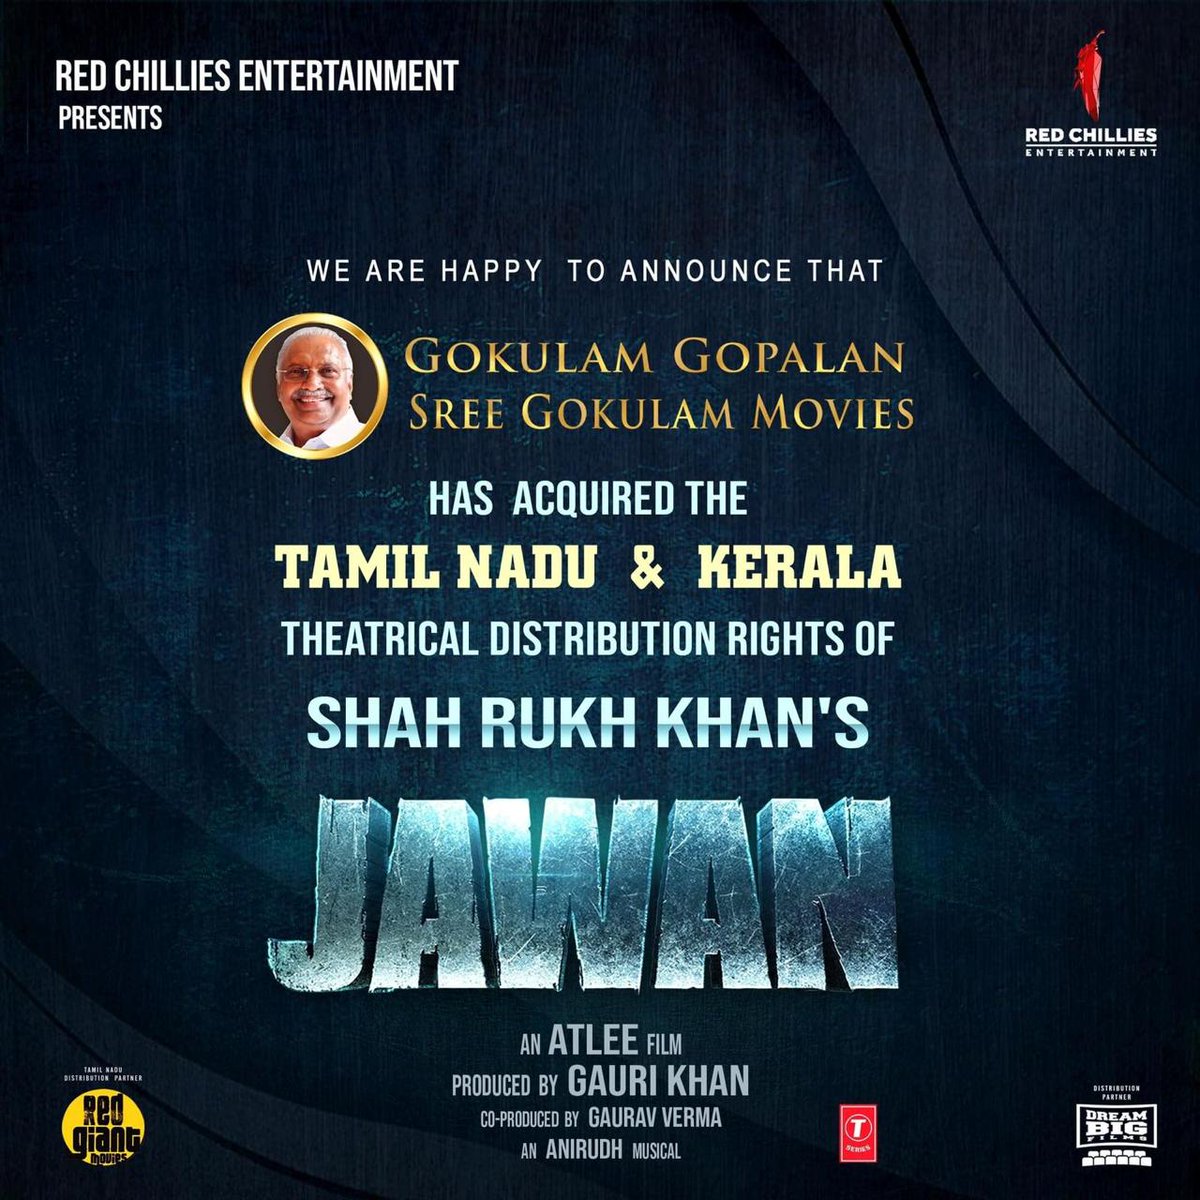 #JAWAN Tamil Nadu & Kerala theatrical distribution rights bagged by @GokulamMovies 

@iamsrk @Atlee_dir @anirudhofficial @RedChilliesEnt @RedGiantMovies_ @GokulamGopalan #VCPraveen #BaijuGopalan @Krishna04085247 @DreamBig_film_s @donechannel1 @digitallynow